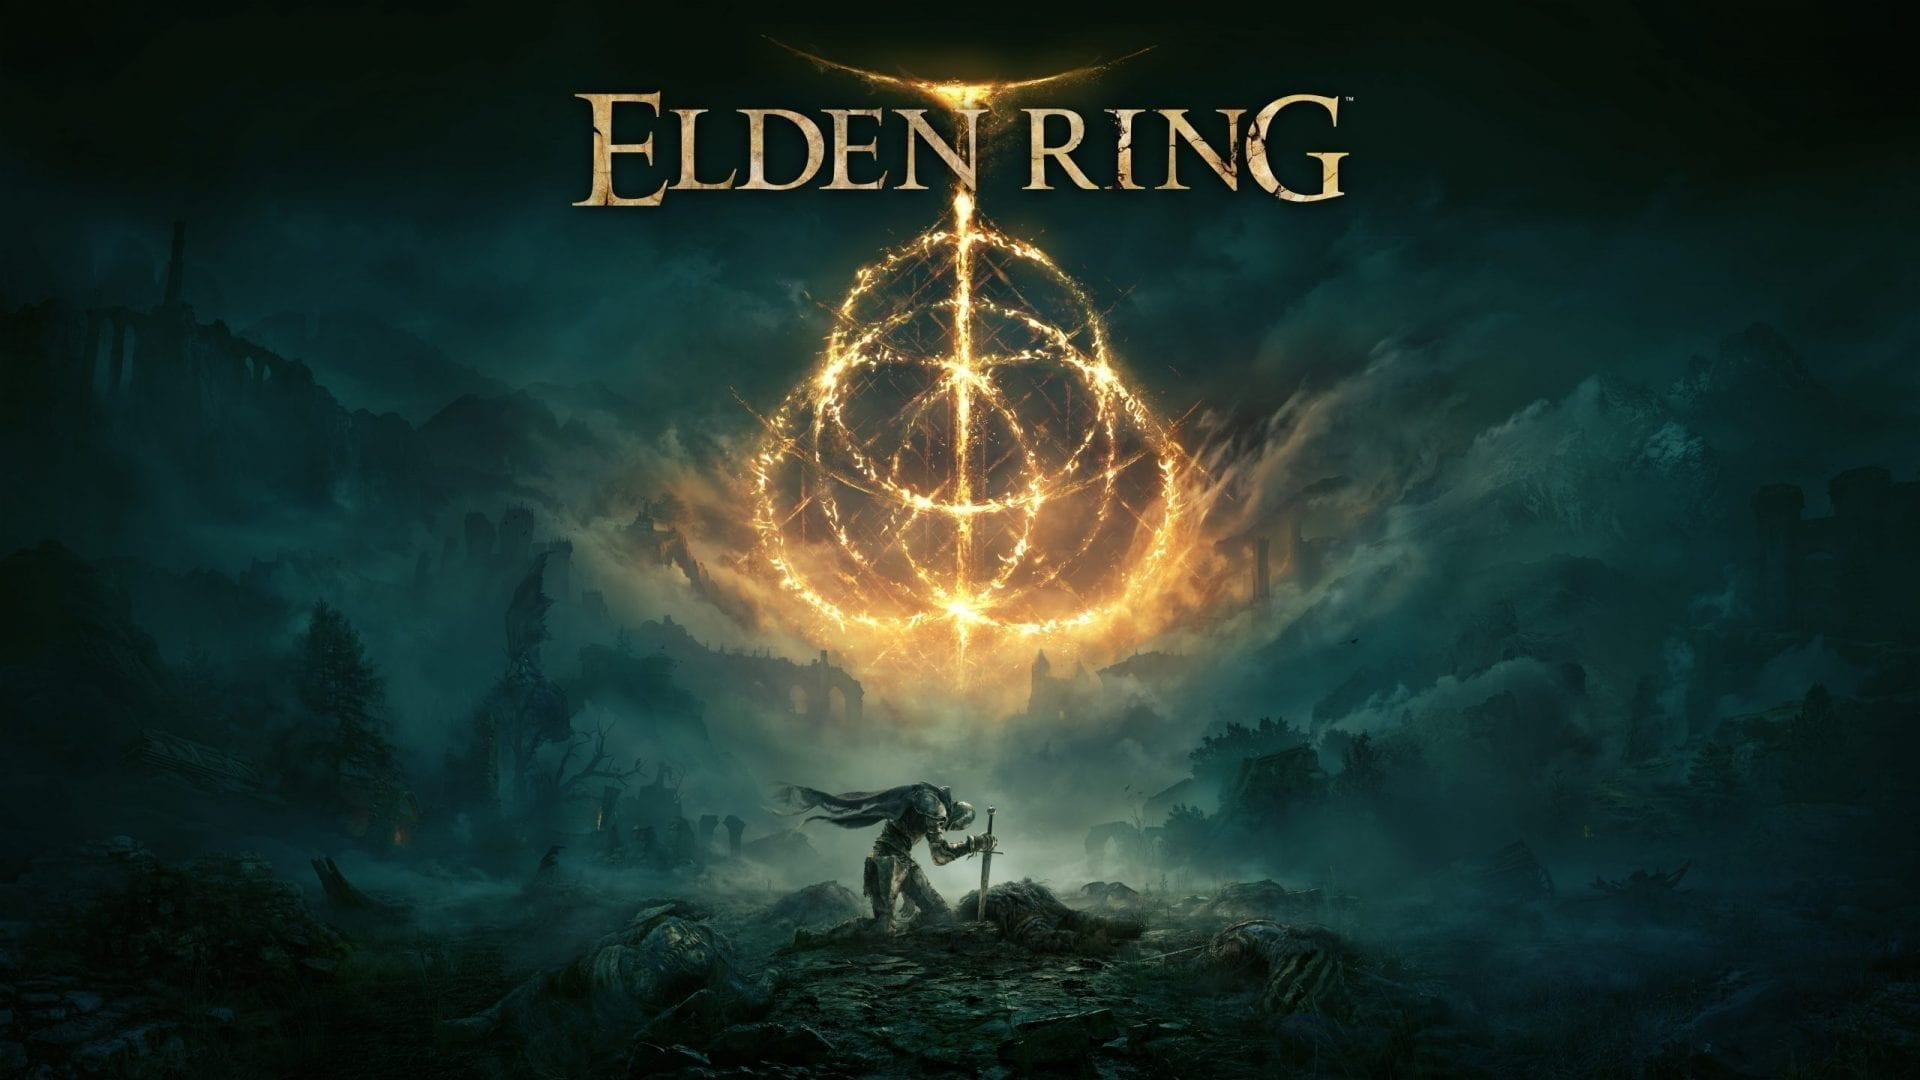 Tibia Mariner (Limgrave) - Elden Ring Guide - IGN